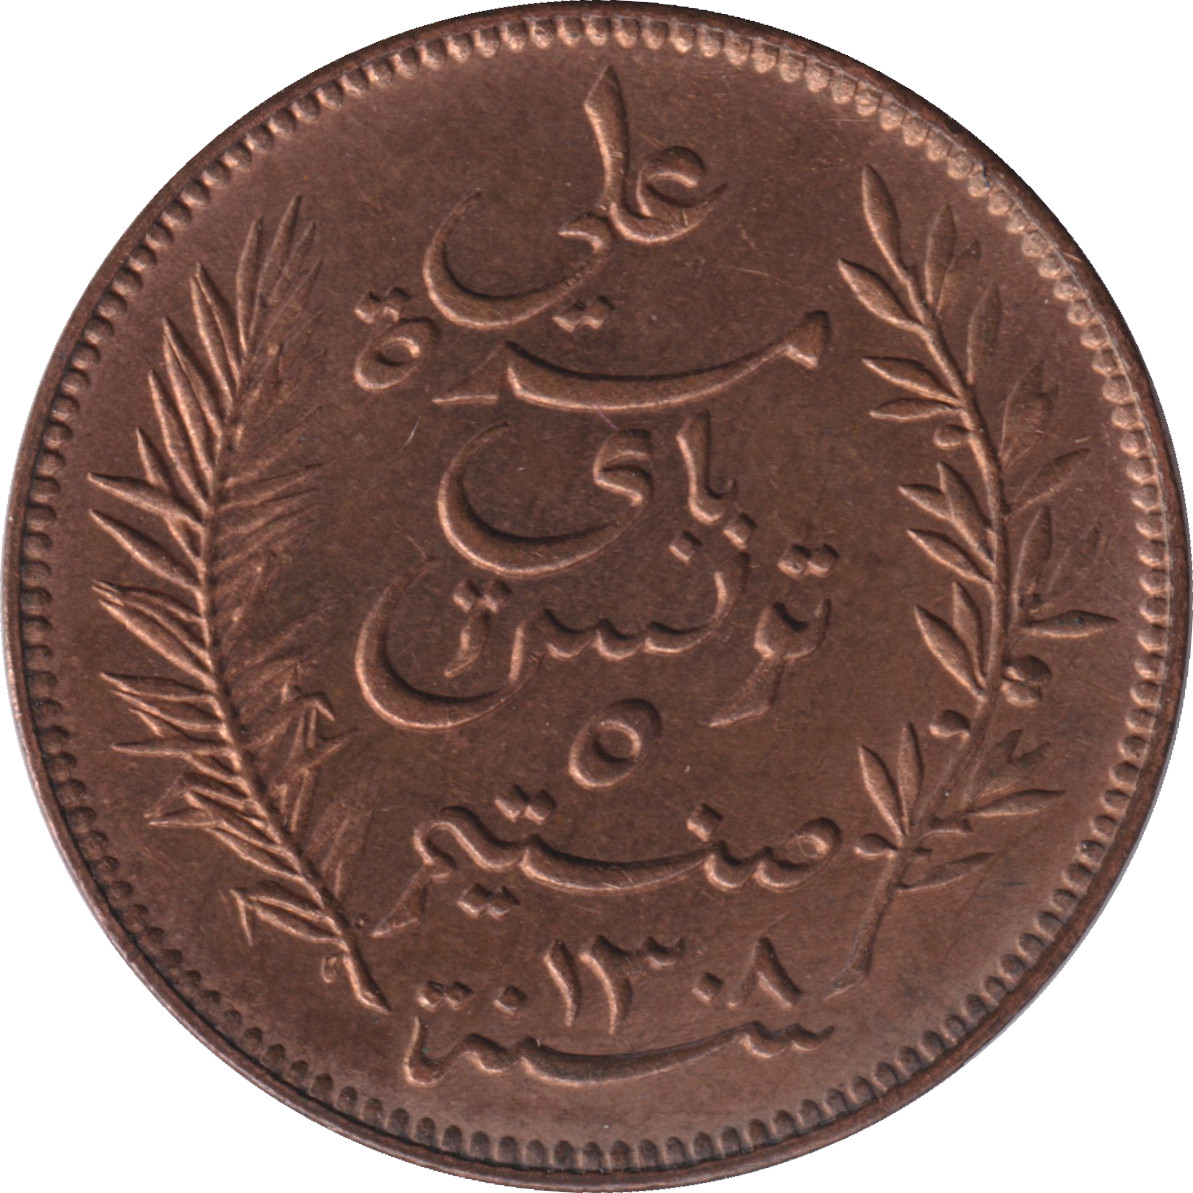 5 centimes - Ali III